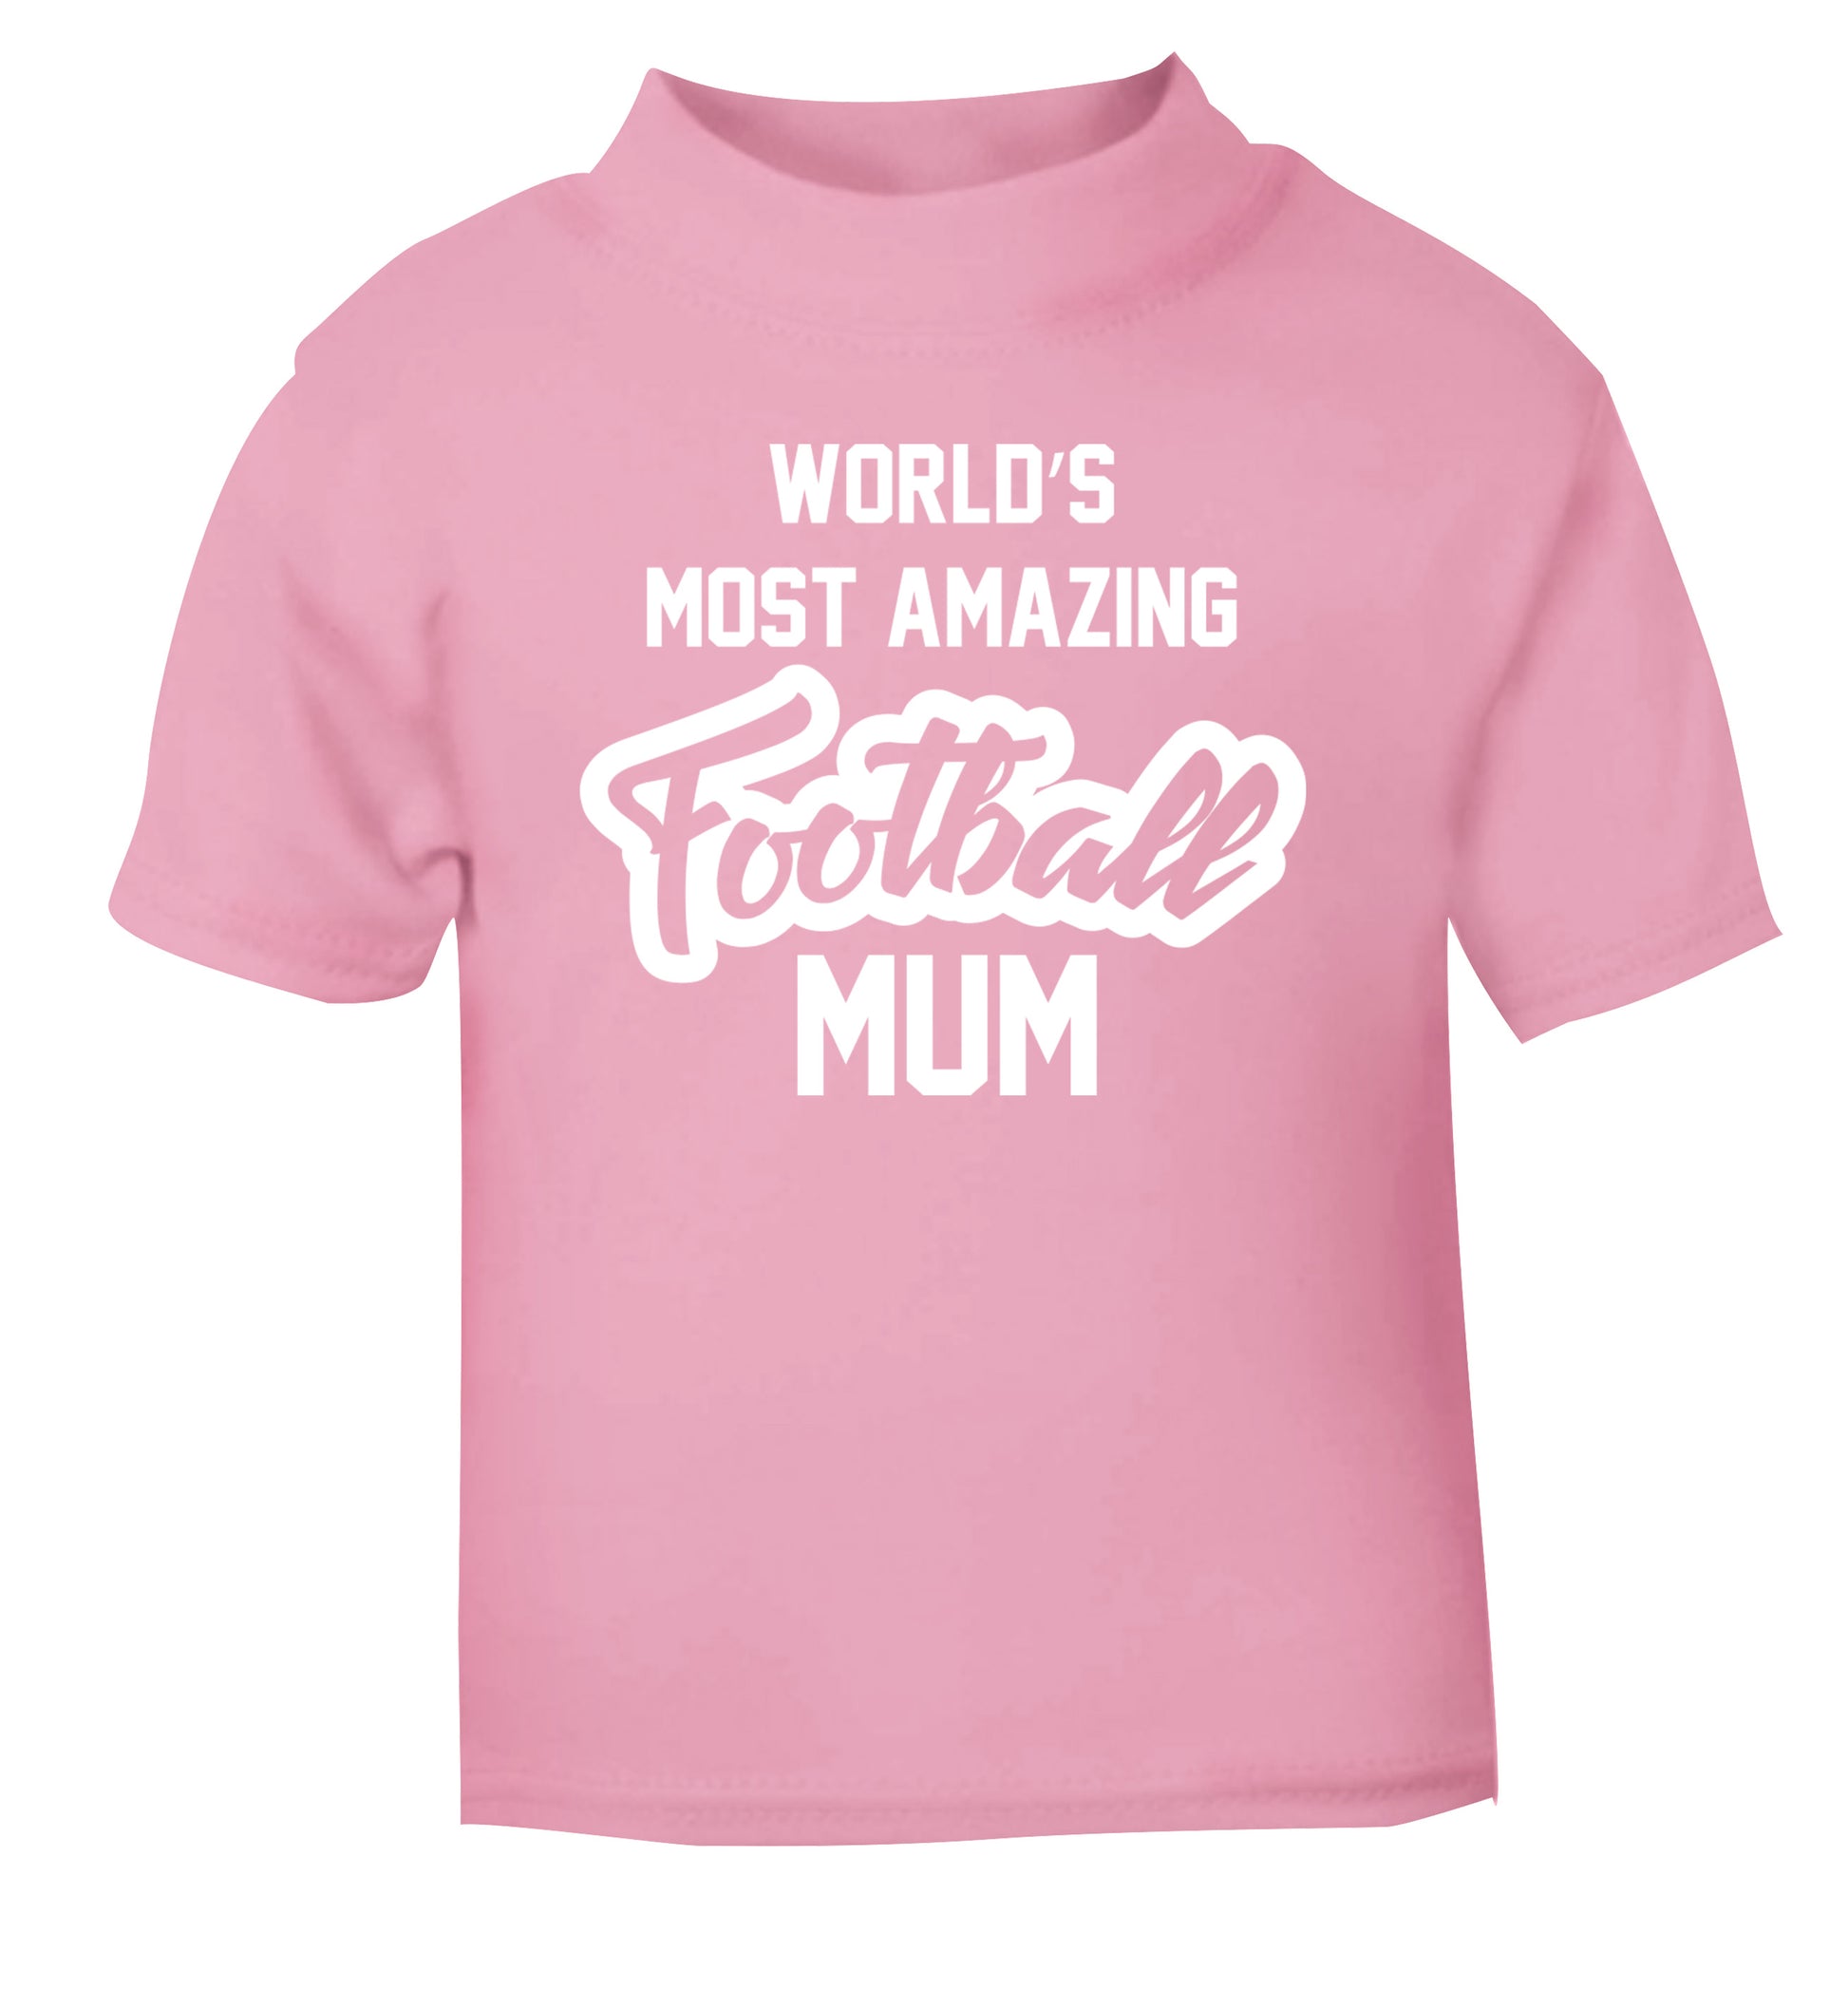 Worlds most amazing football mum light pink Baby Toddler Tshirt 2 Years